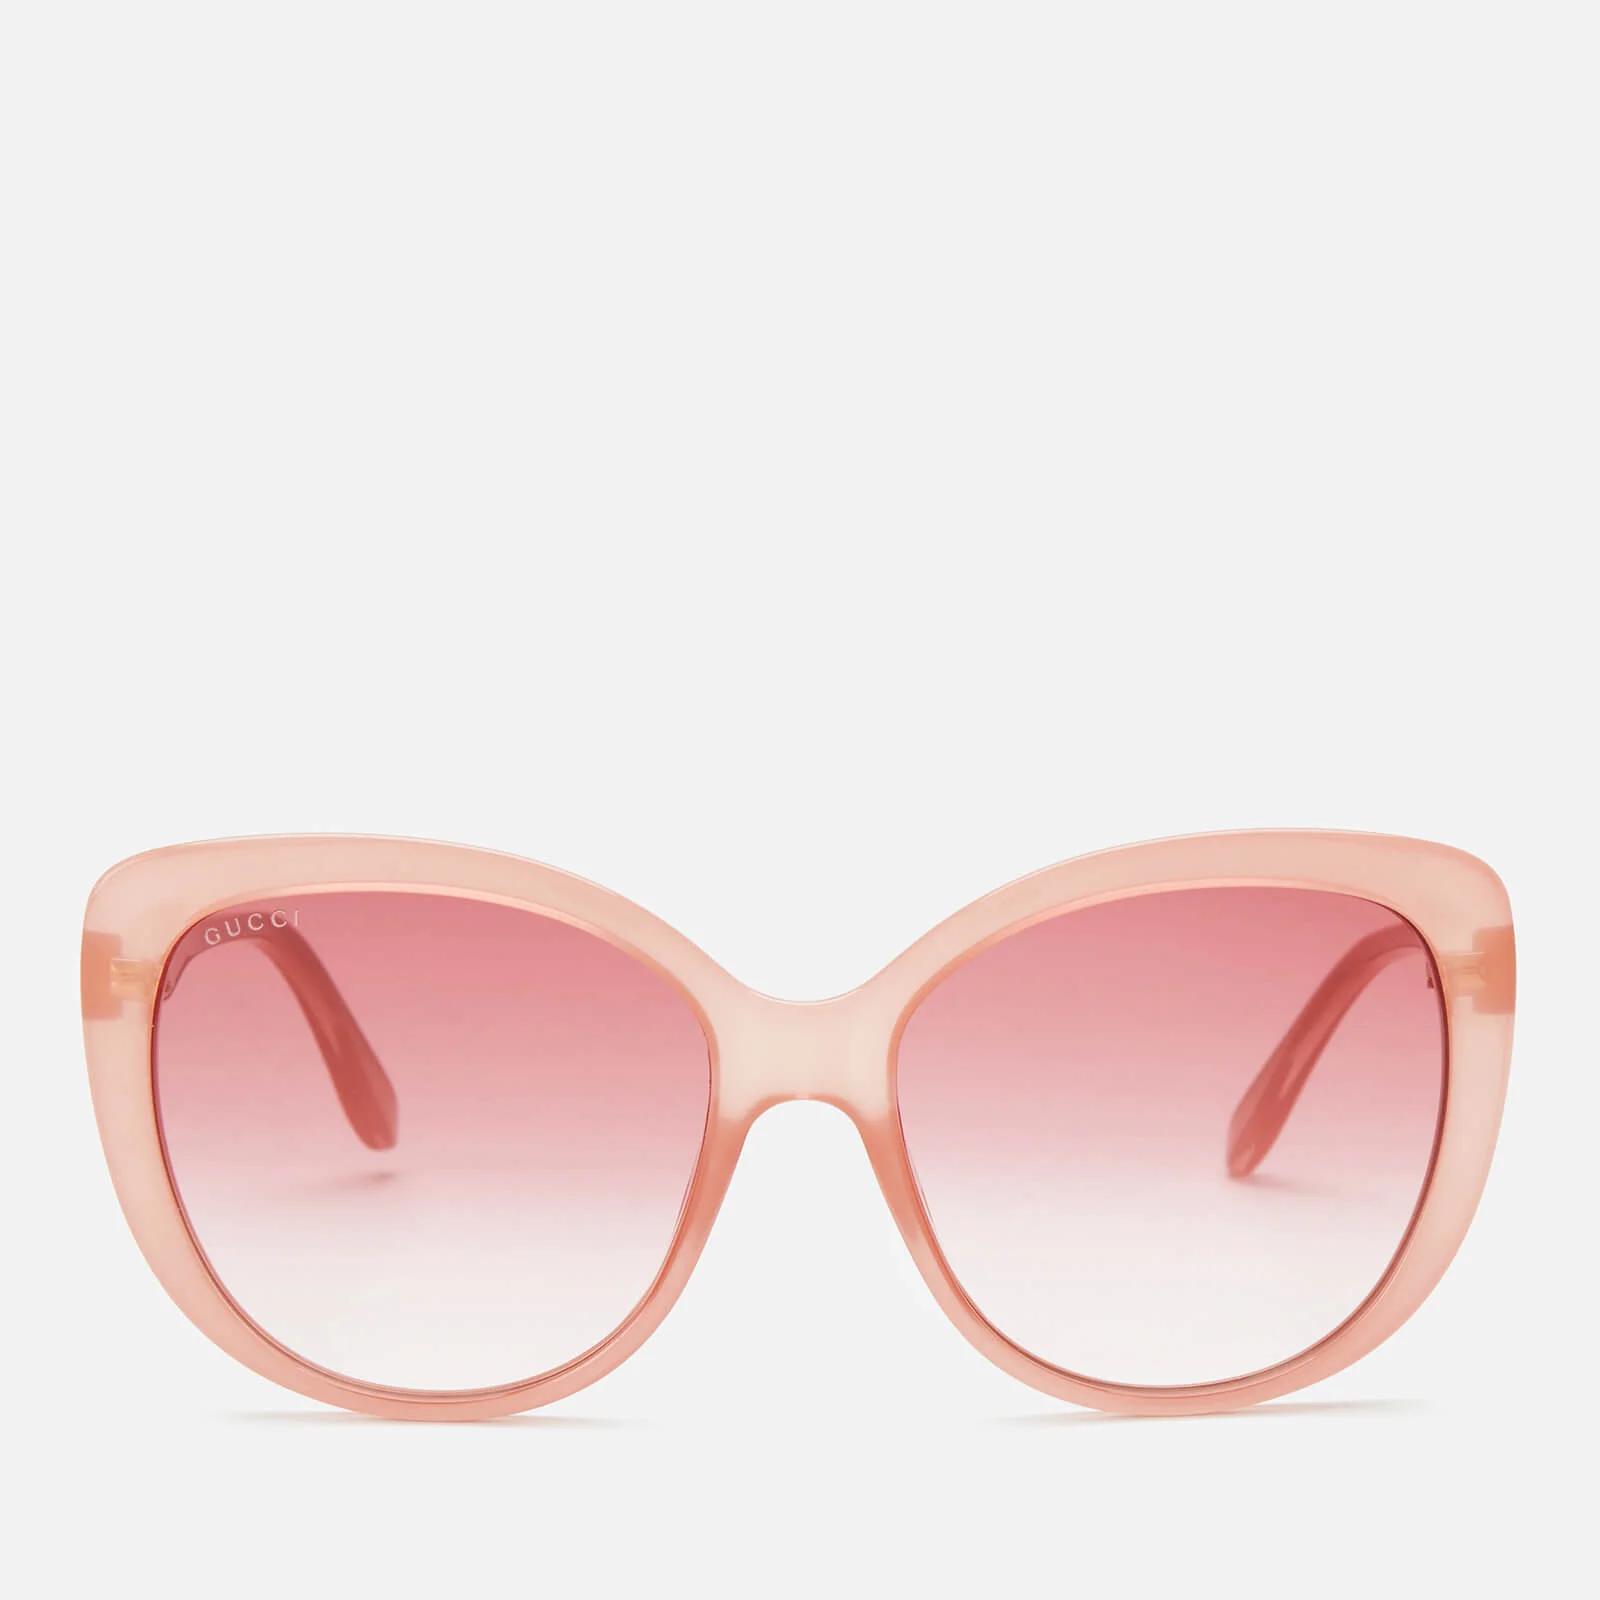 Gucci Women's Cat Eye Sunglasses - Pink/Red Image 1